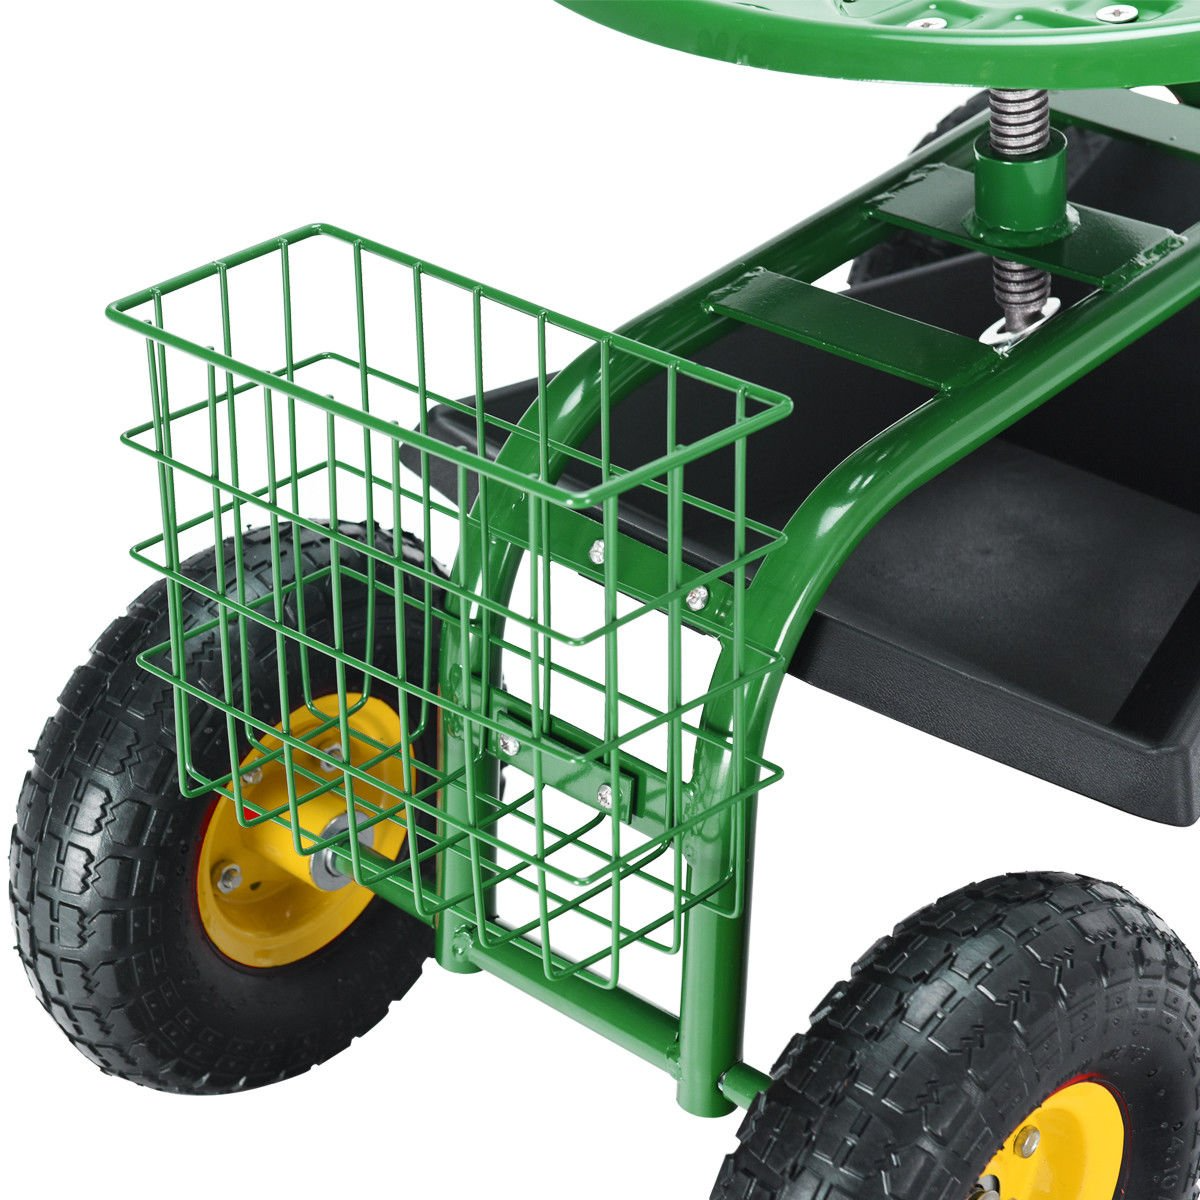 Giantex Garden Cart Rolling Tray Gardening Planting with Work Seat, Green